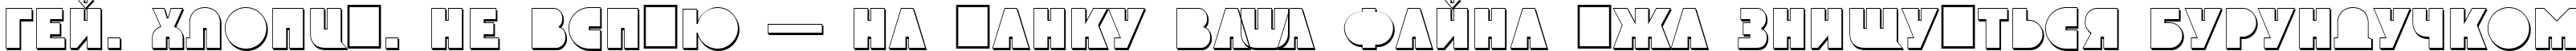 Пример написания шрифтом a_GrotoSh текста на украинском